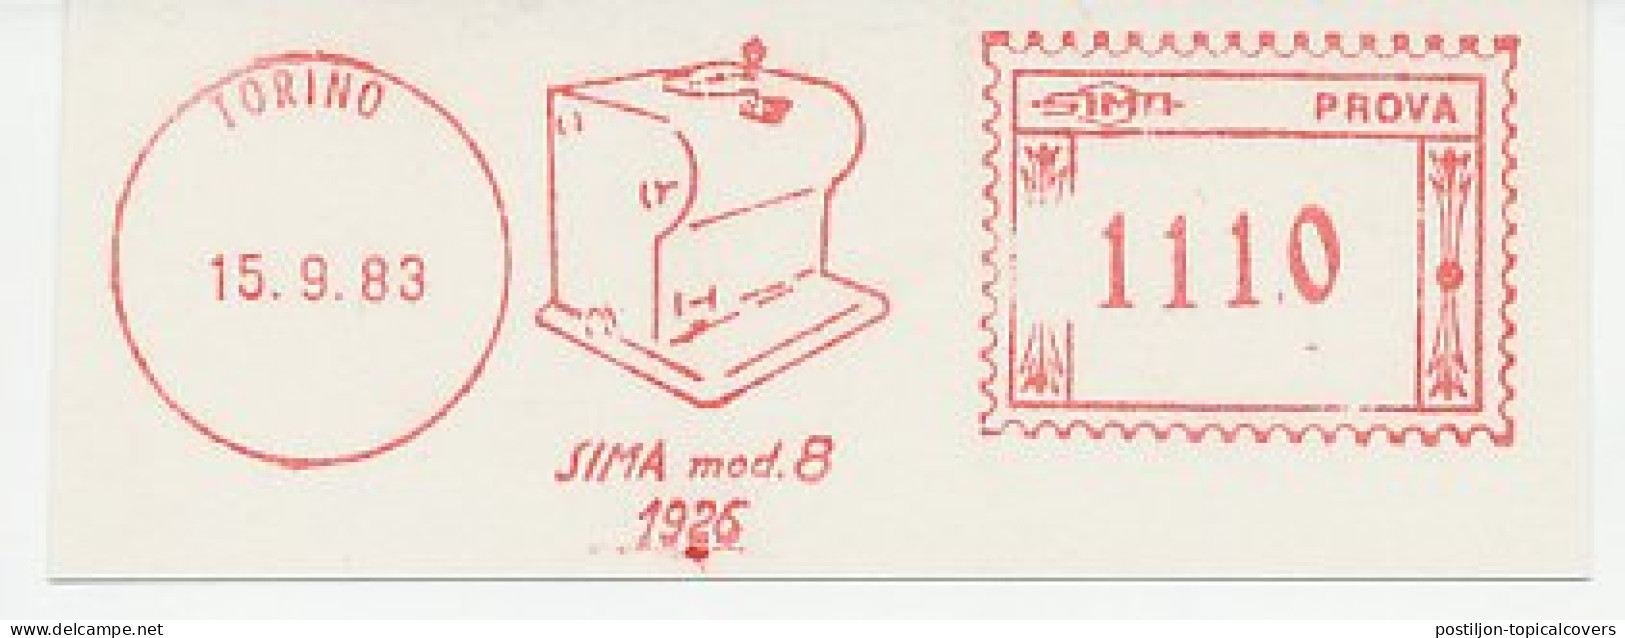 Proof Meter Cut Italy 1983 Sima - Mod. 8 1926 - Viñetas De Franqueo [ATM]